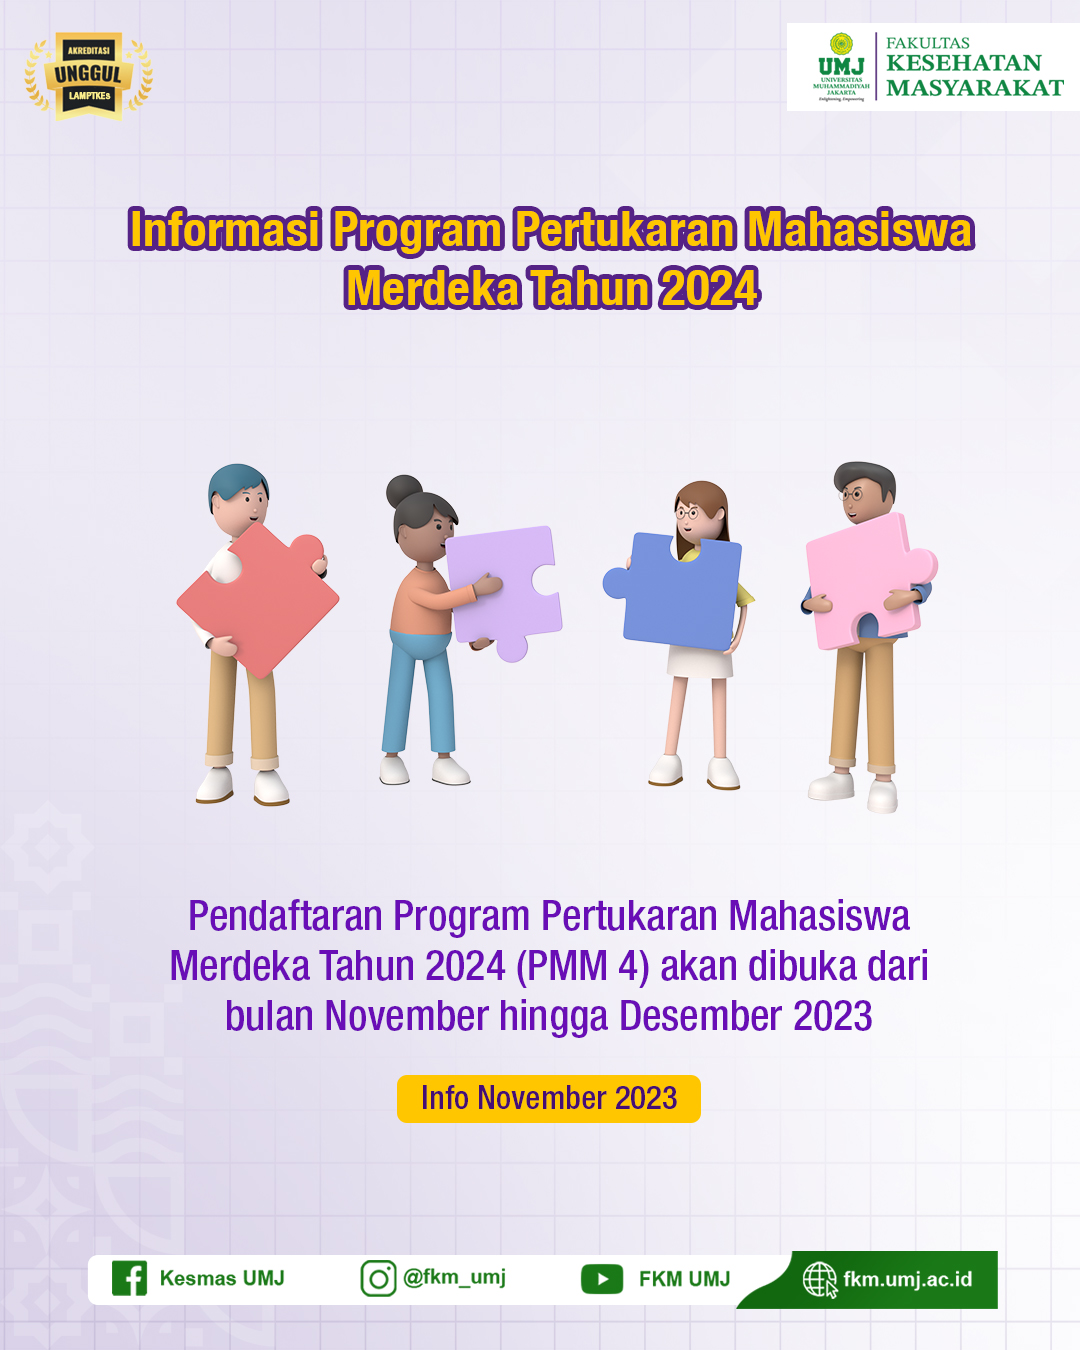 Info: Program Pertukaran Mahasiswa Merdeka Tahun 2024